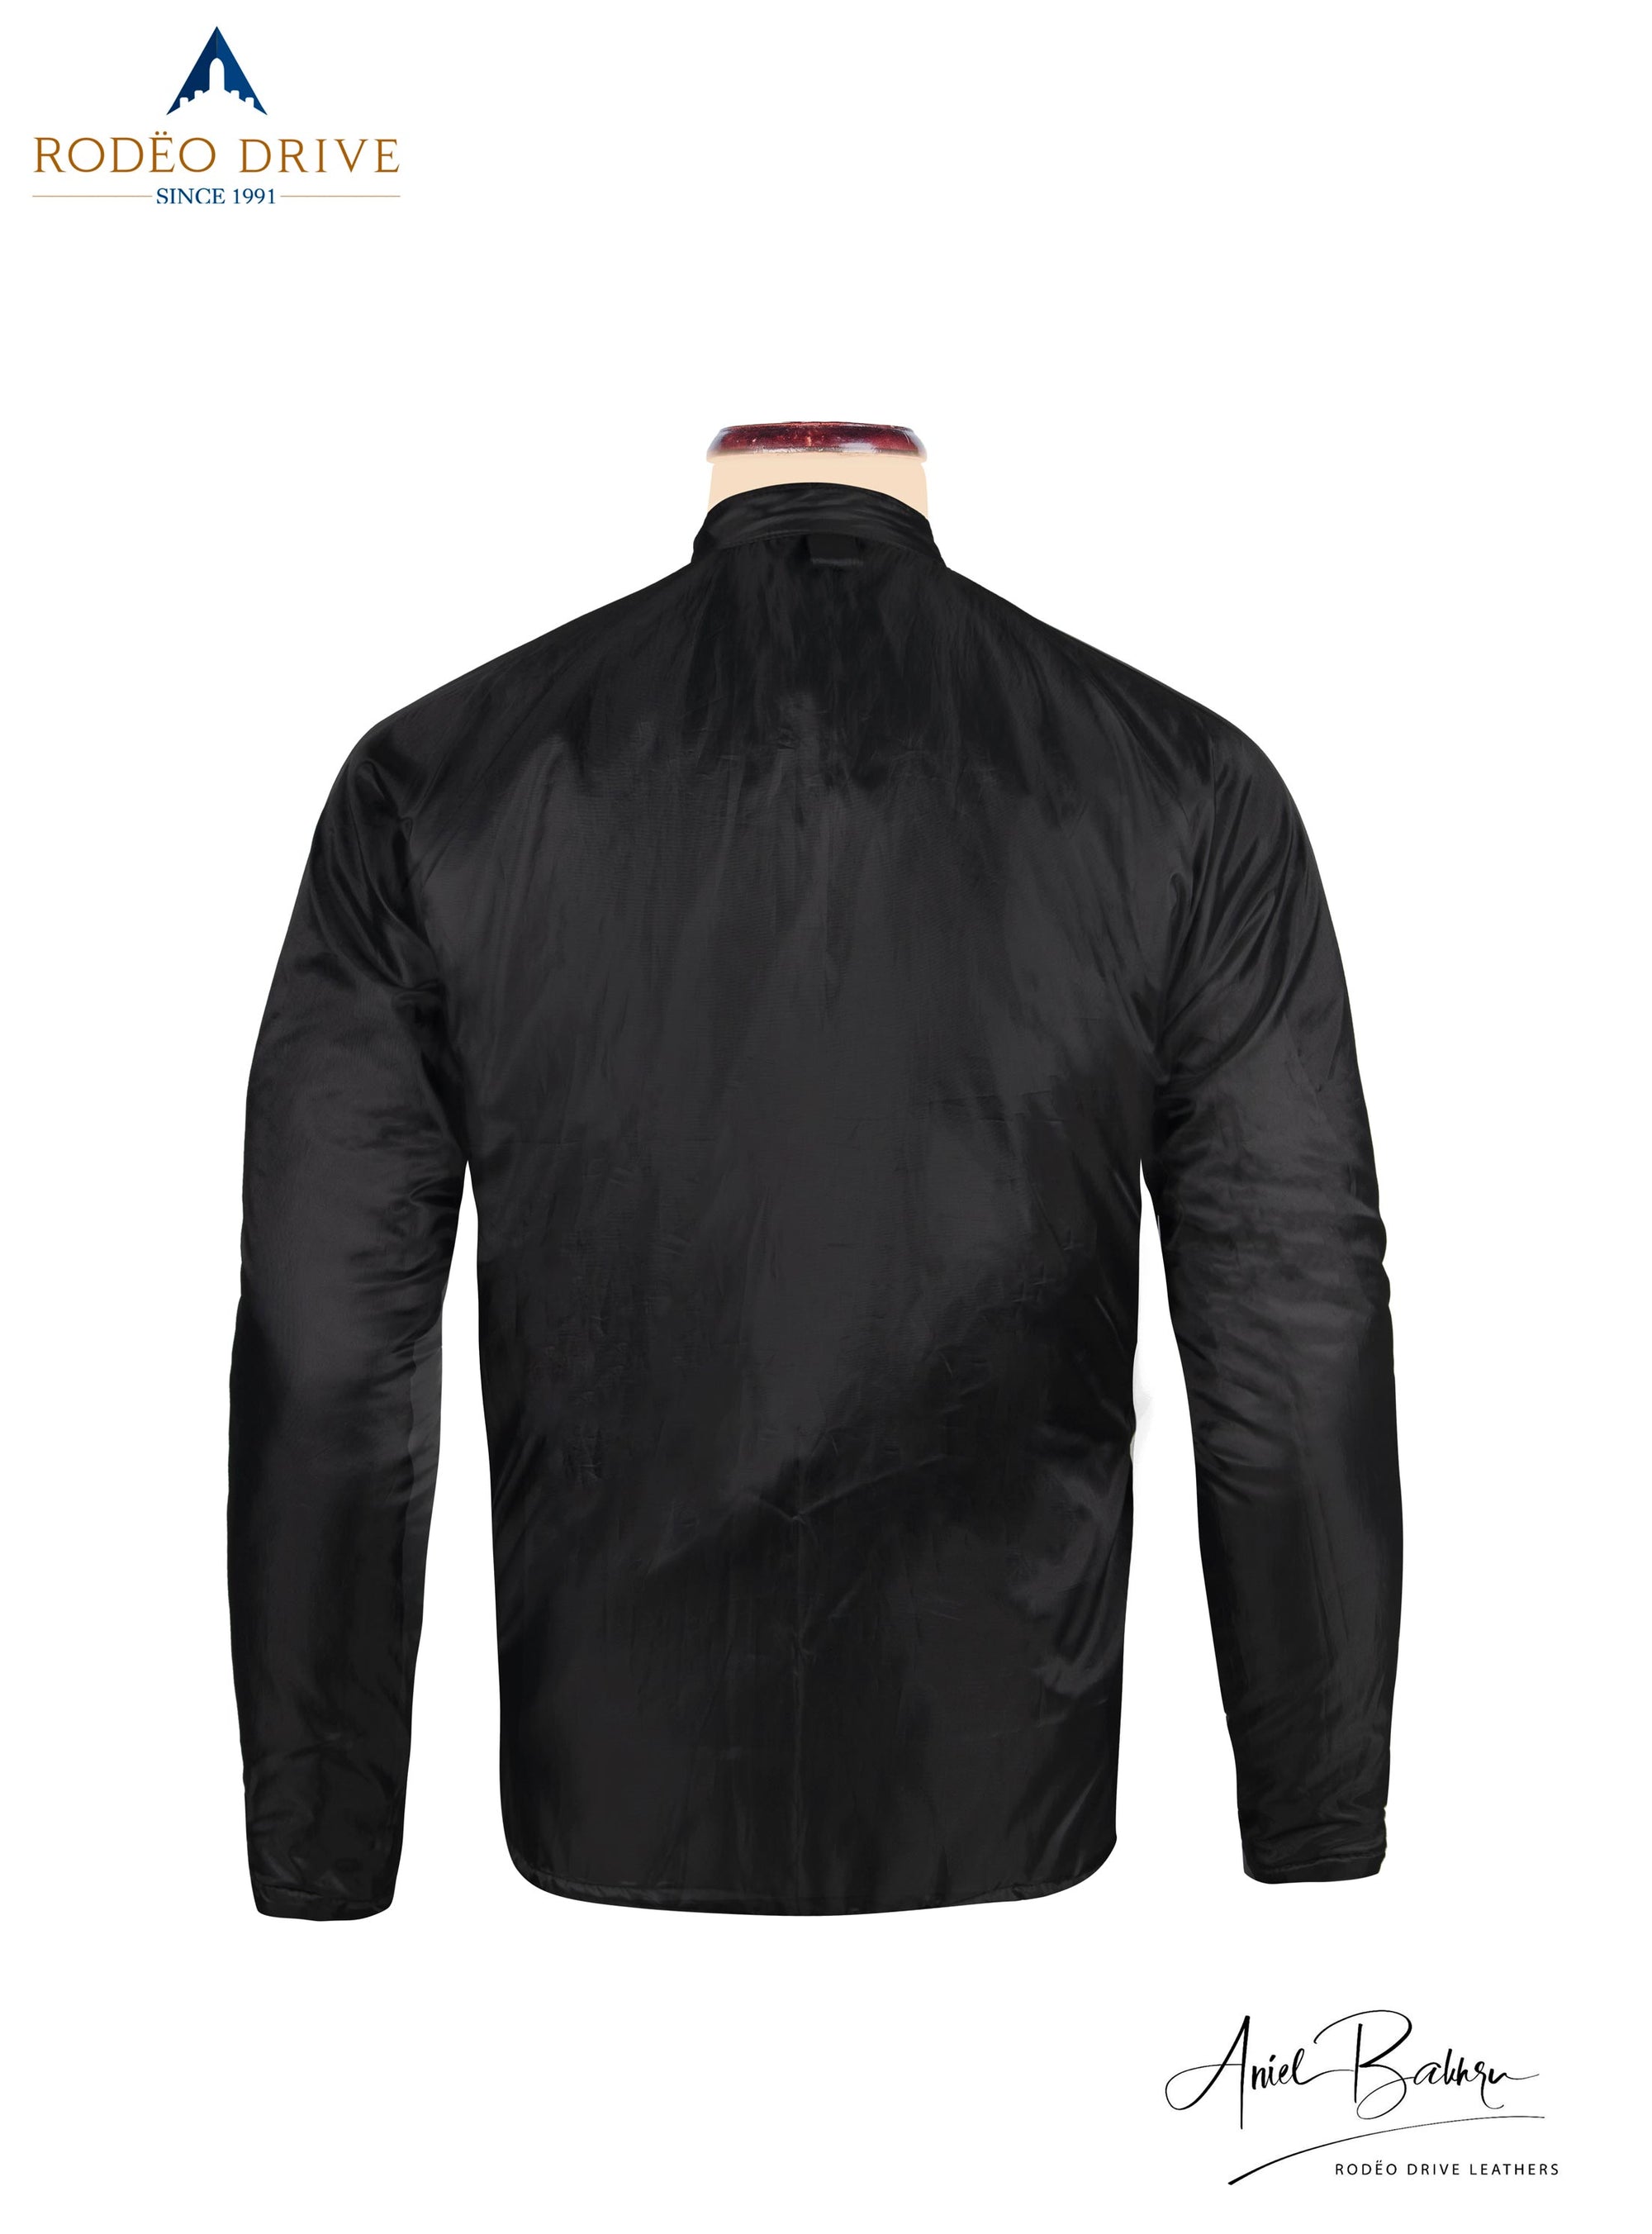 Back side image of plain black Leather jacket